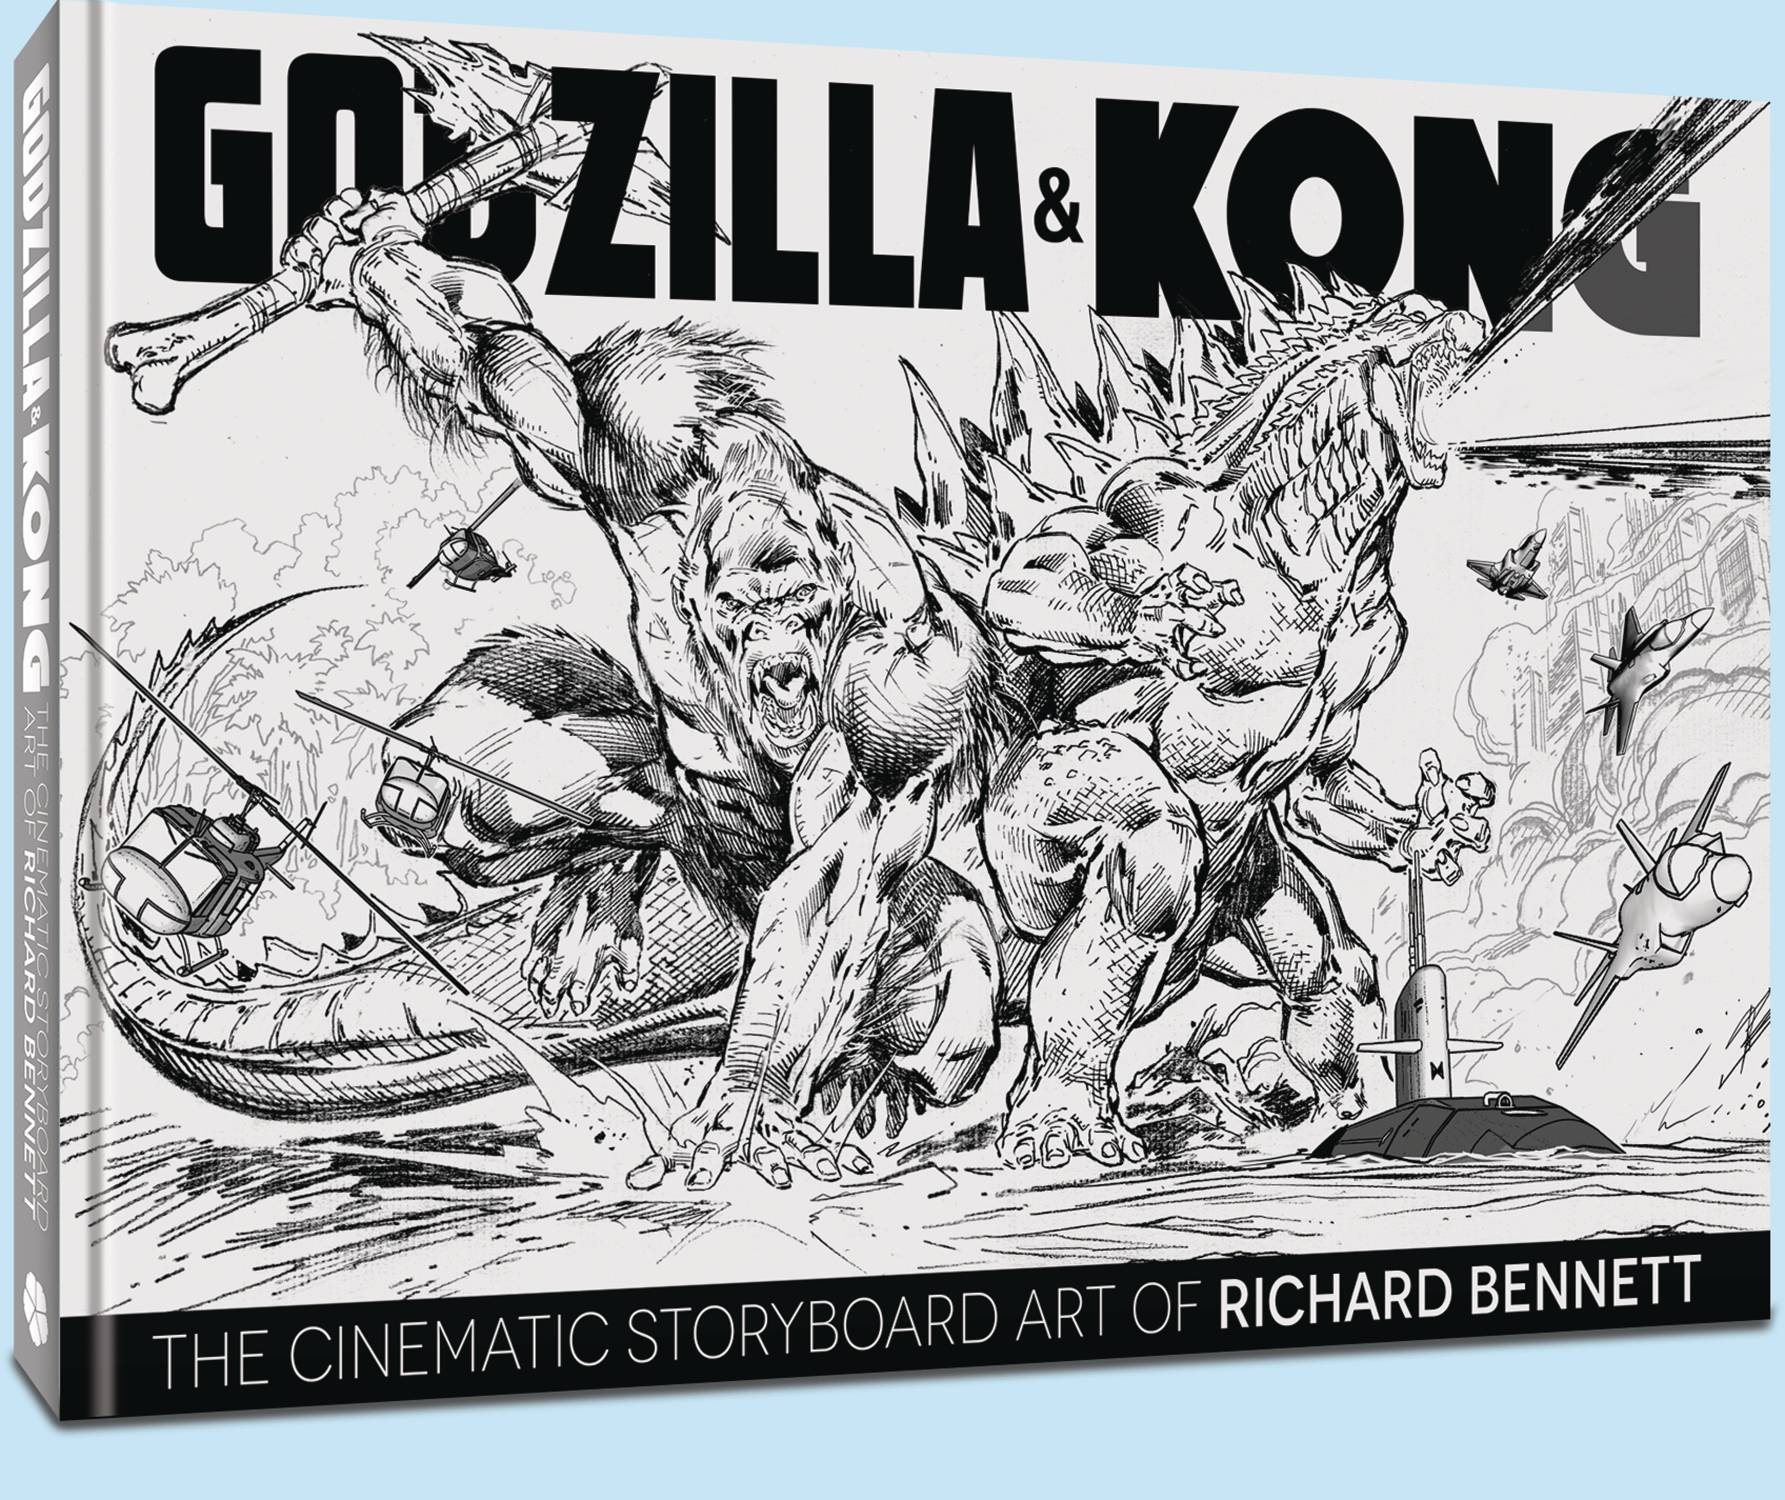 GODZILLA & KONG CINEMATIC STORYBOARD ART OF RICHARD BENNETT